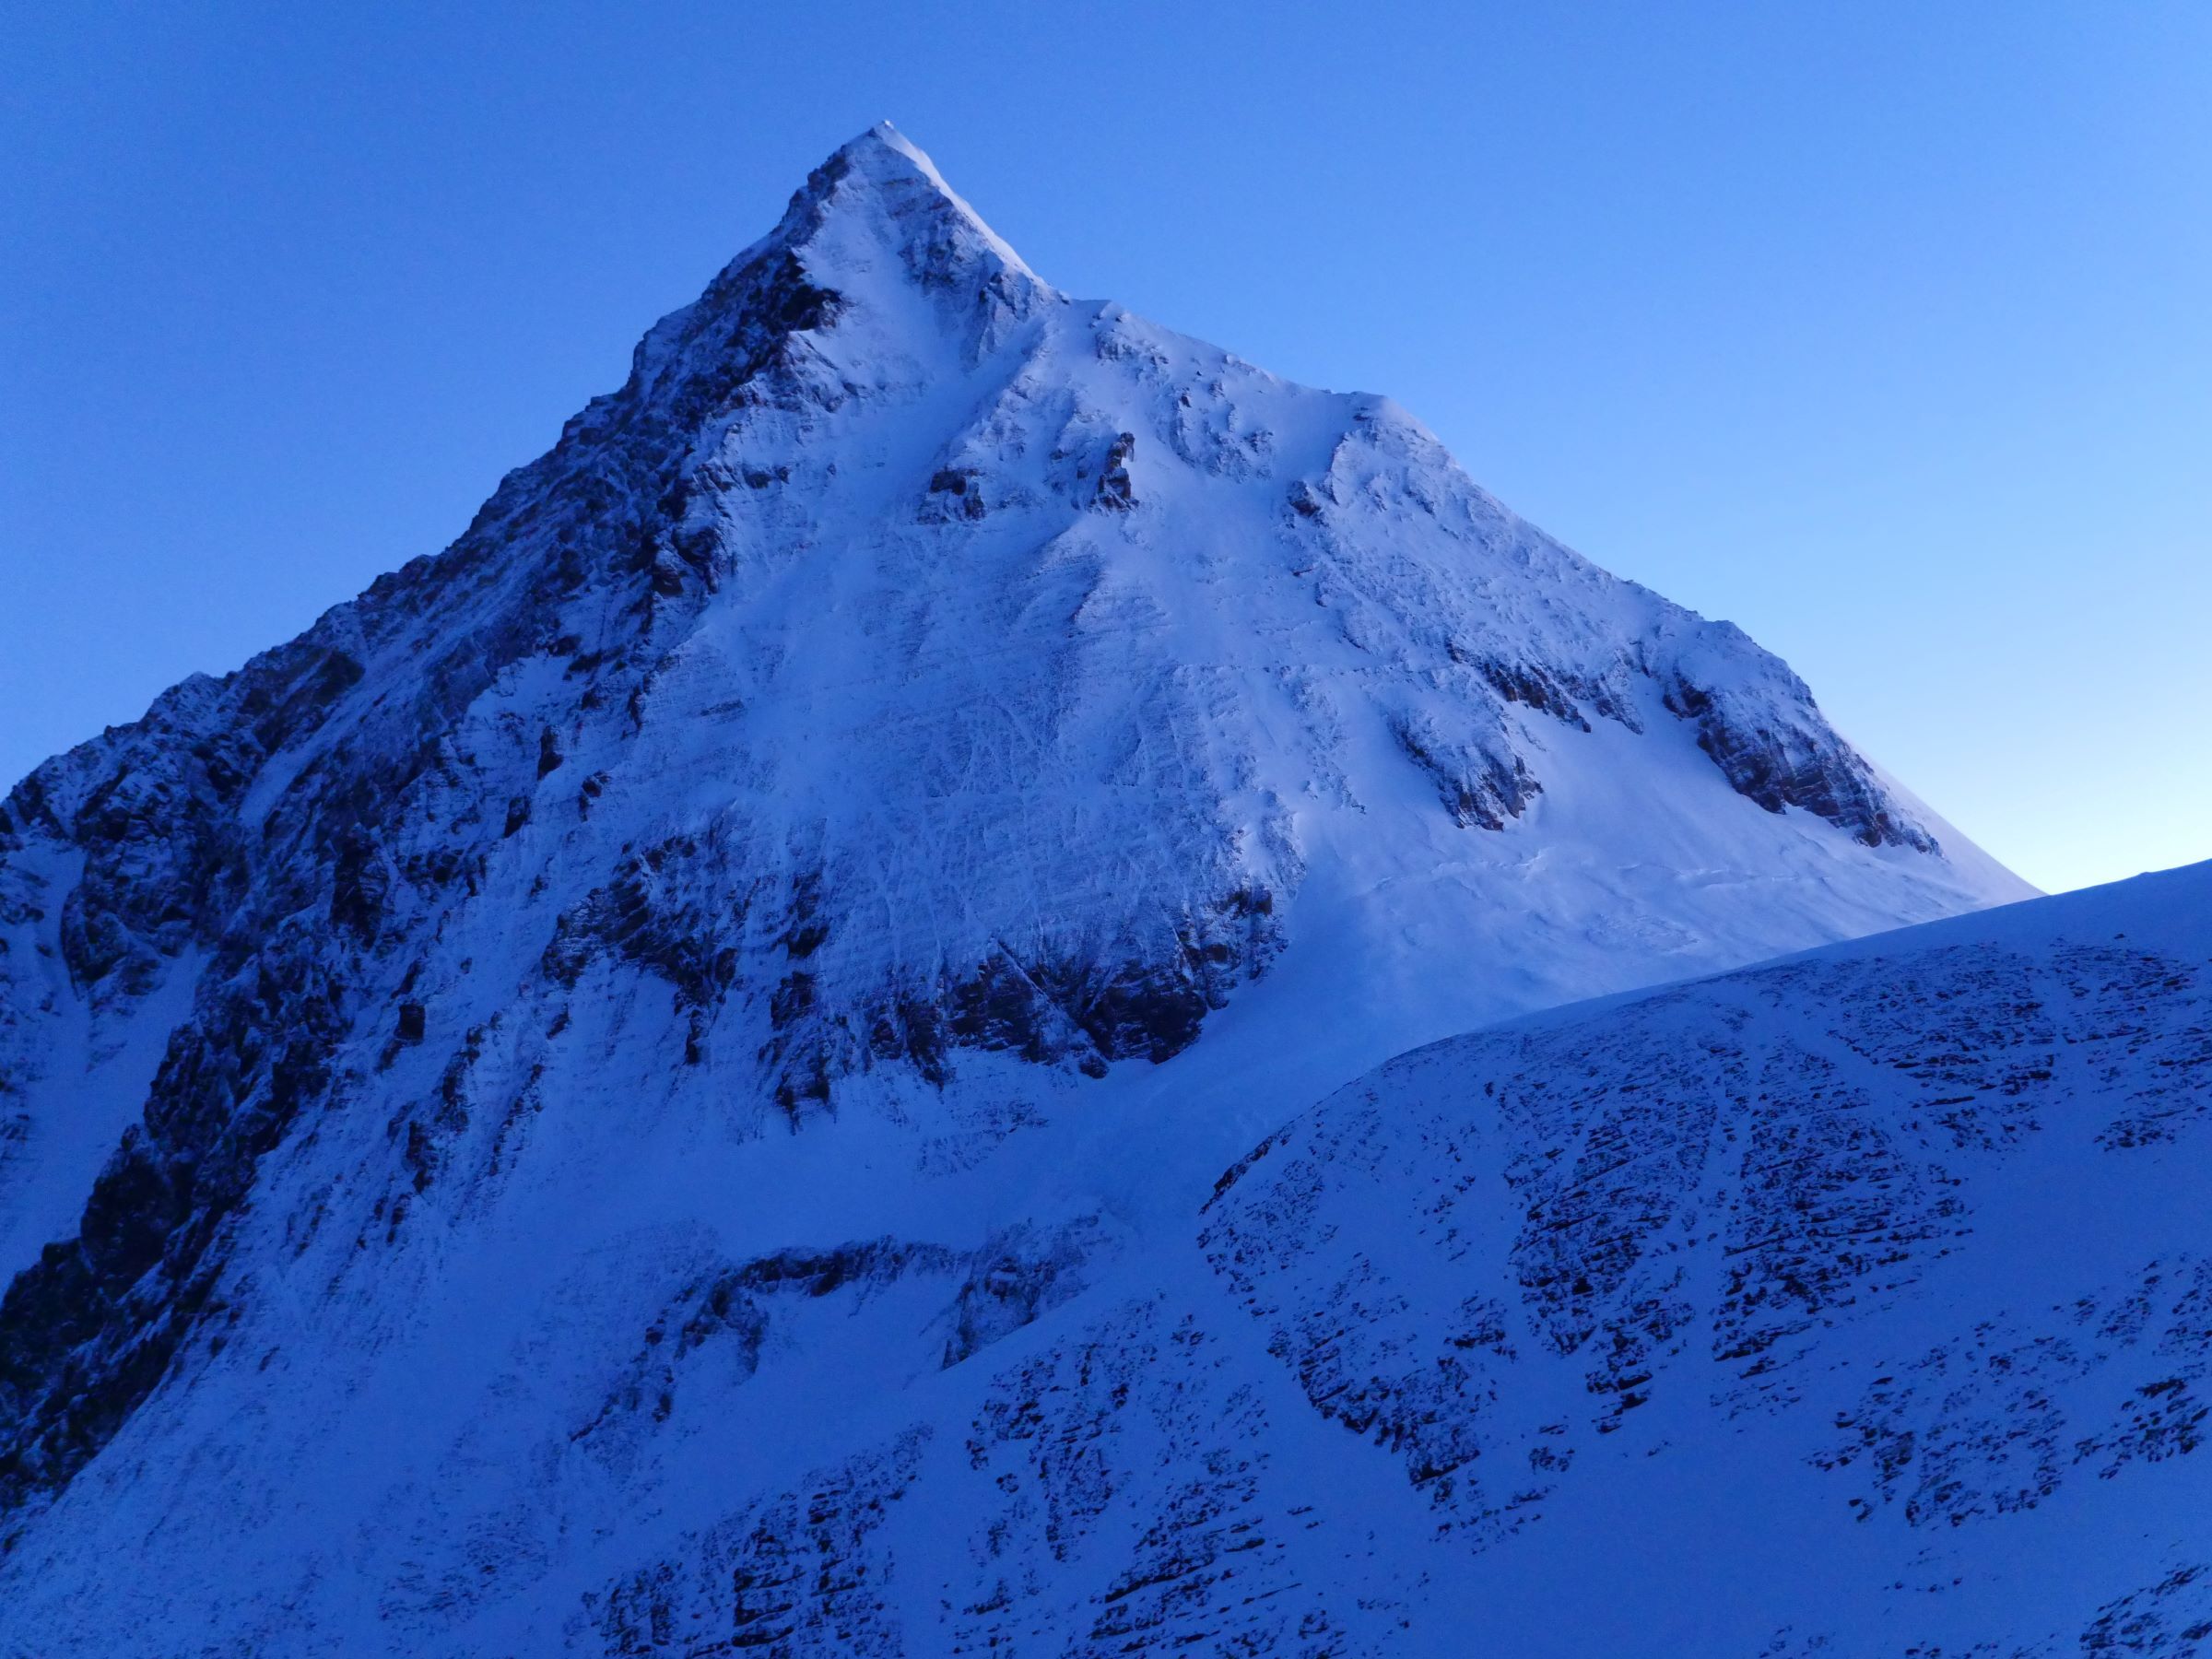 Mt Everest at dawn